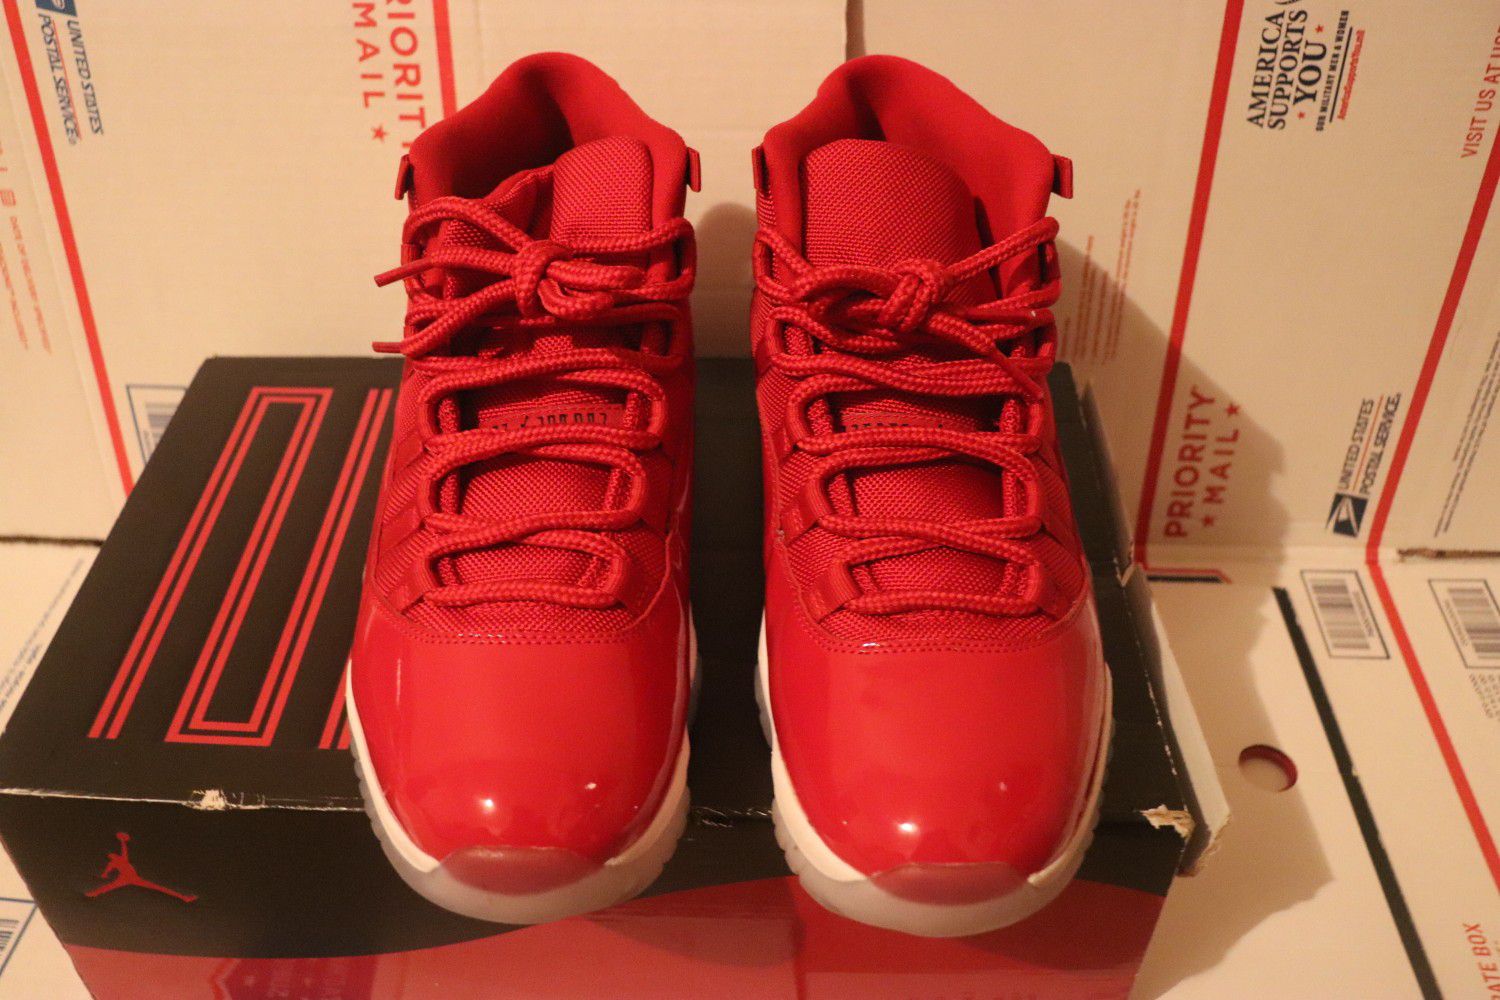 Nike Air Jordan Retro 11 WIN LIKE '96 "Gym Red" size 10.5 (378037 623)